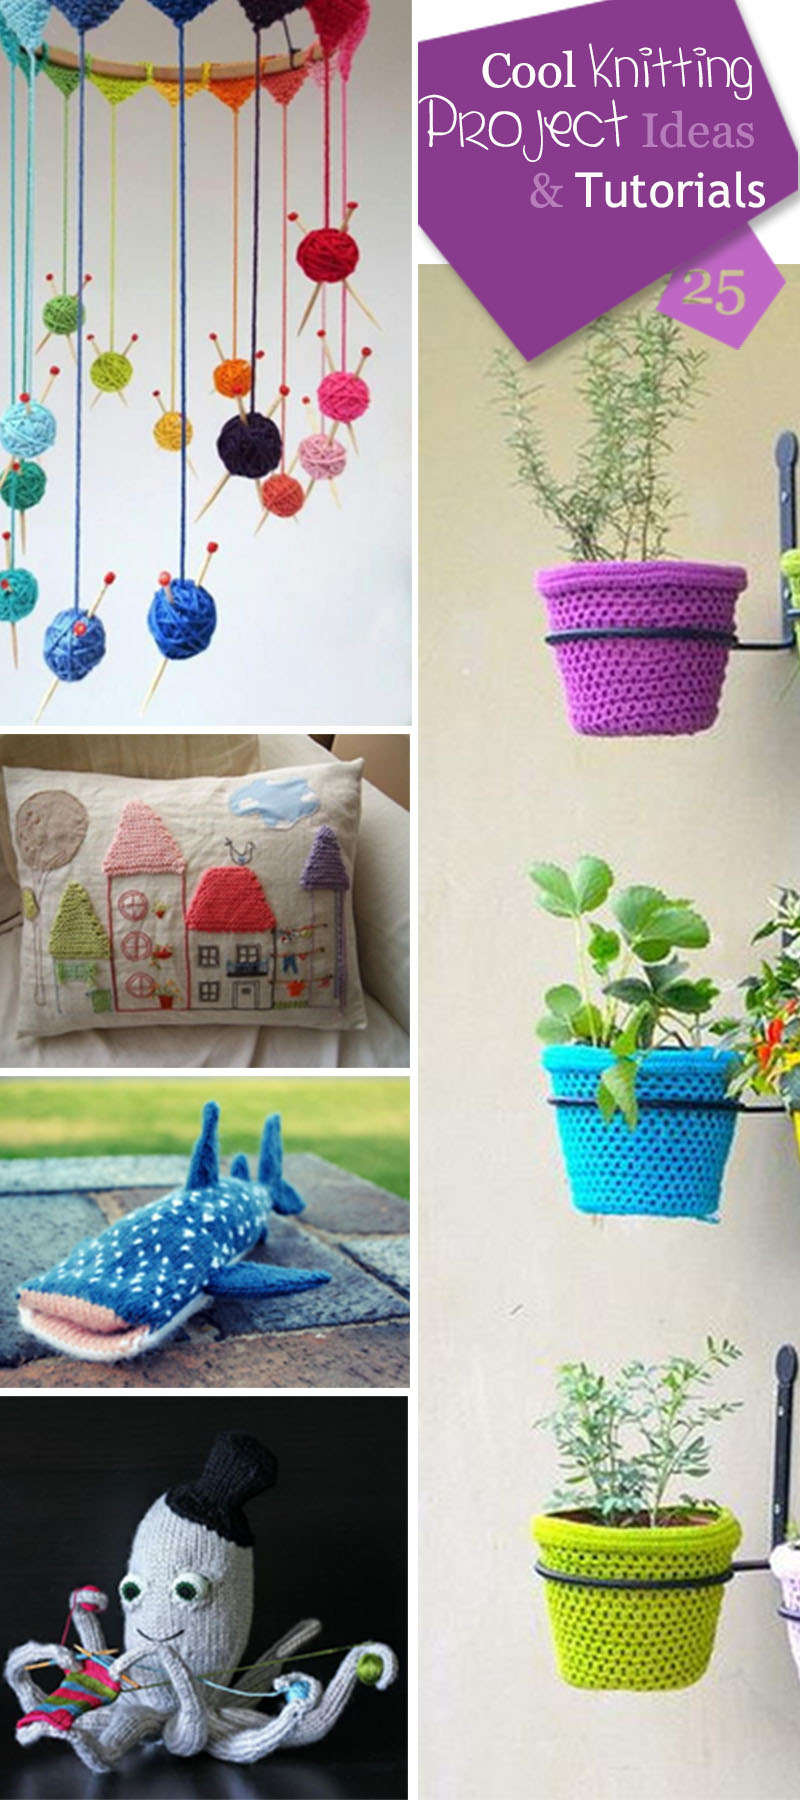 Cool Knitting Project Ideas & Tutorials!